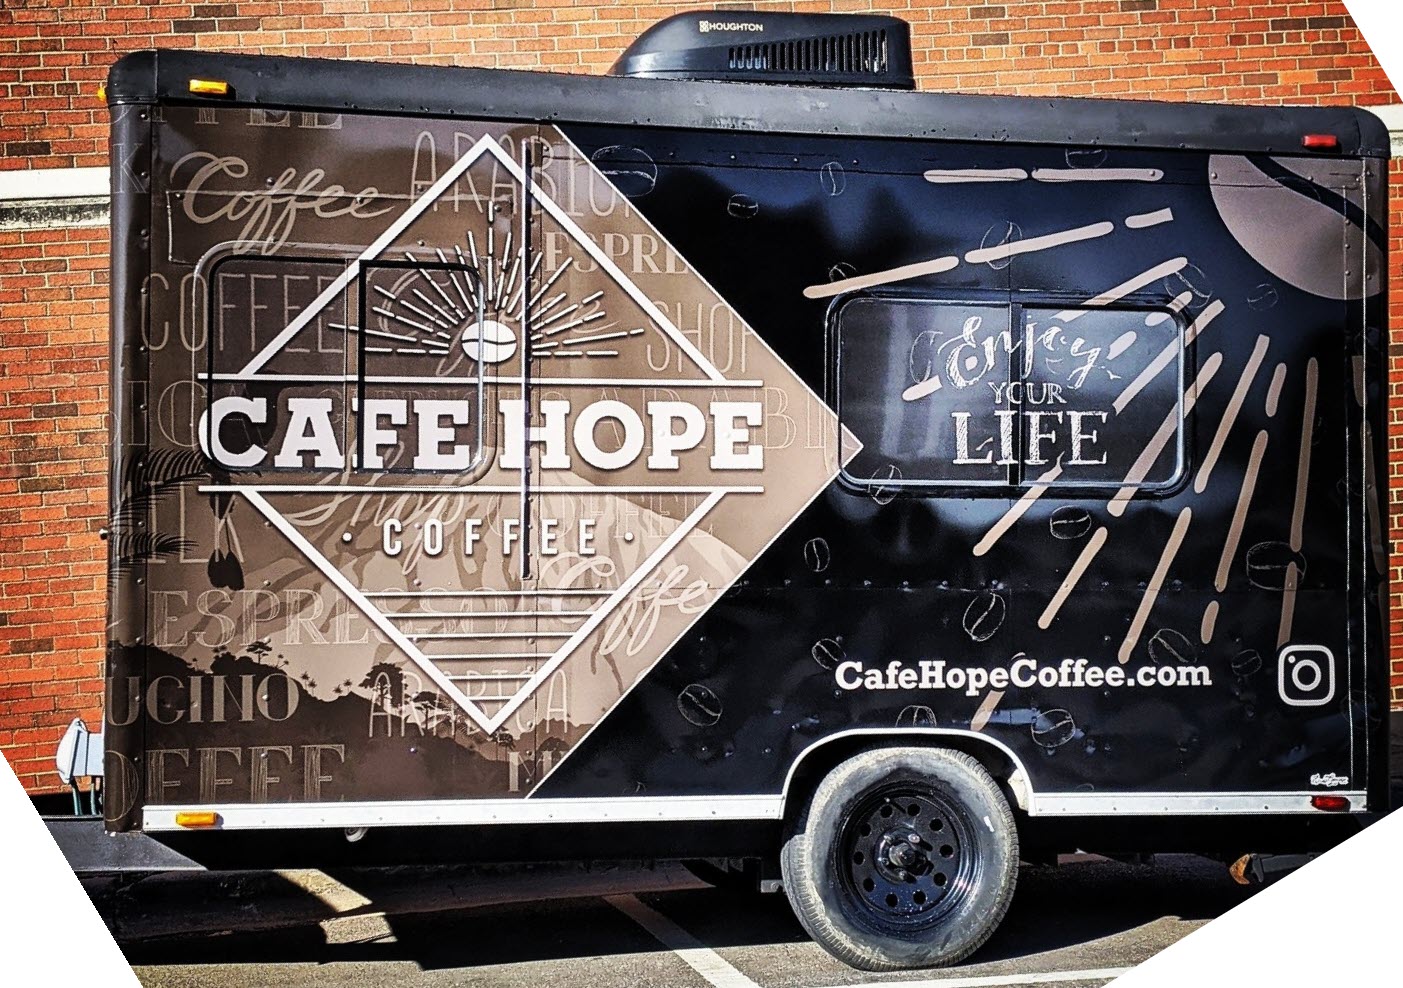 Cafe Hope Coffe